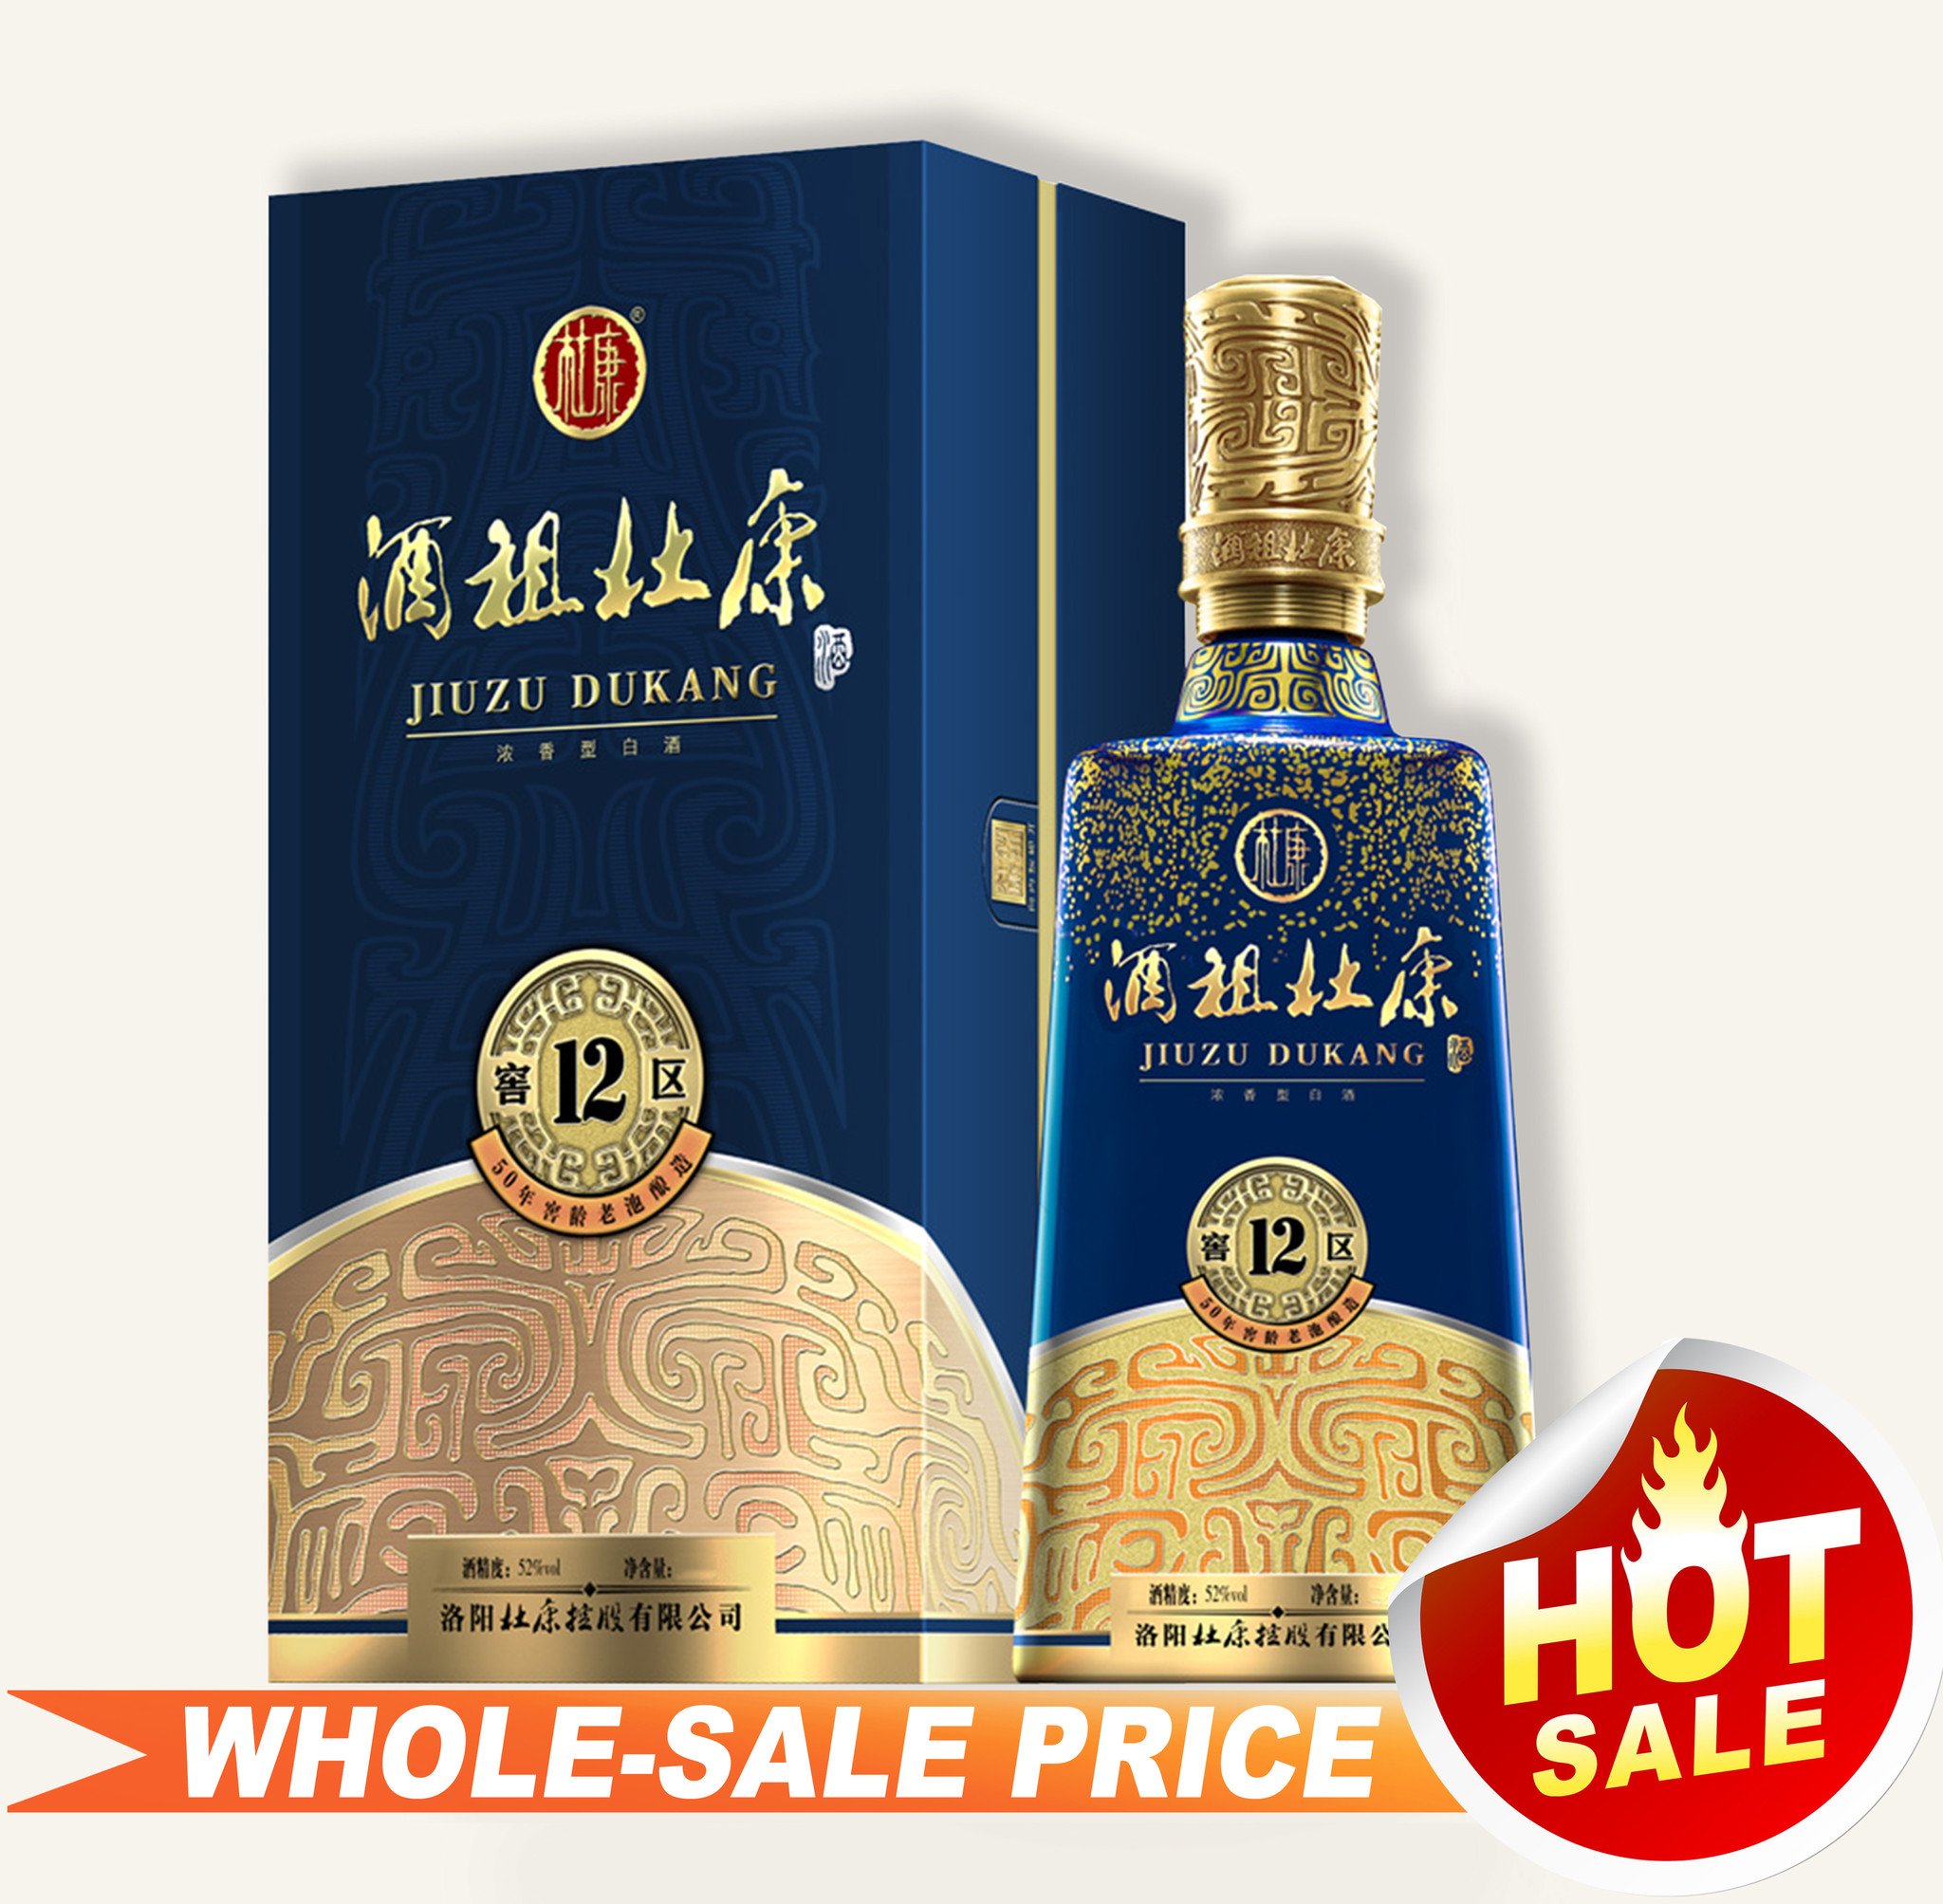 Jiuzu Dukang 12 Cellar Blue 酒祖杜康 12窖 蓝盒 375ml $58